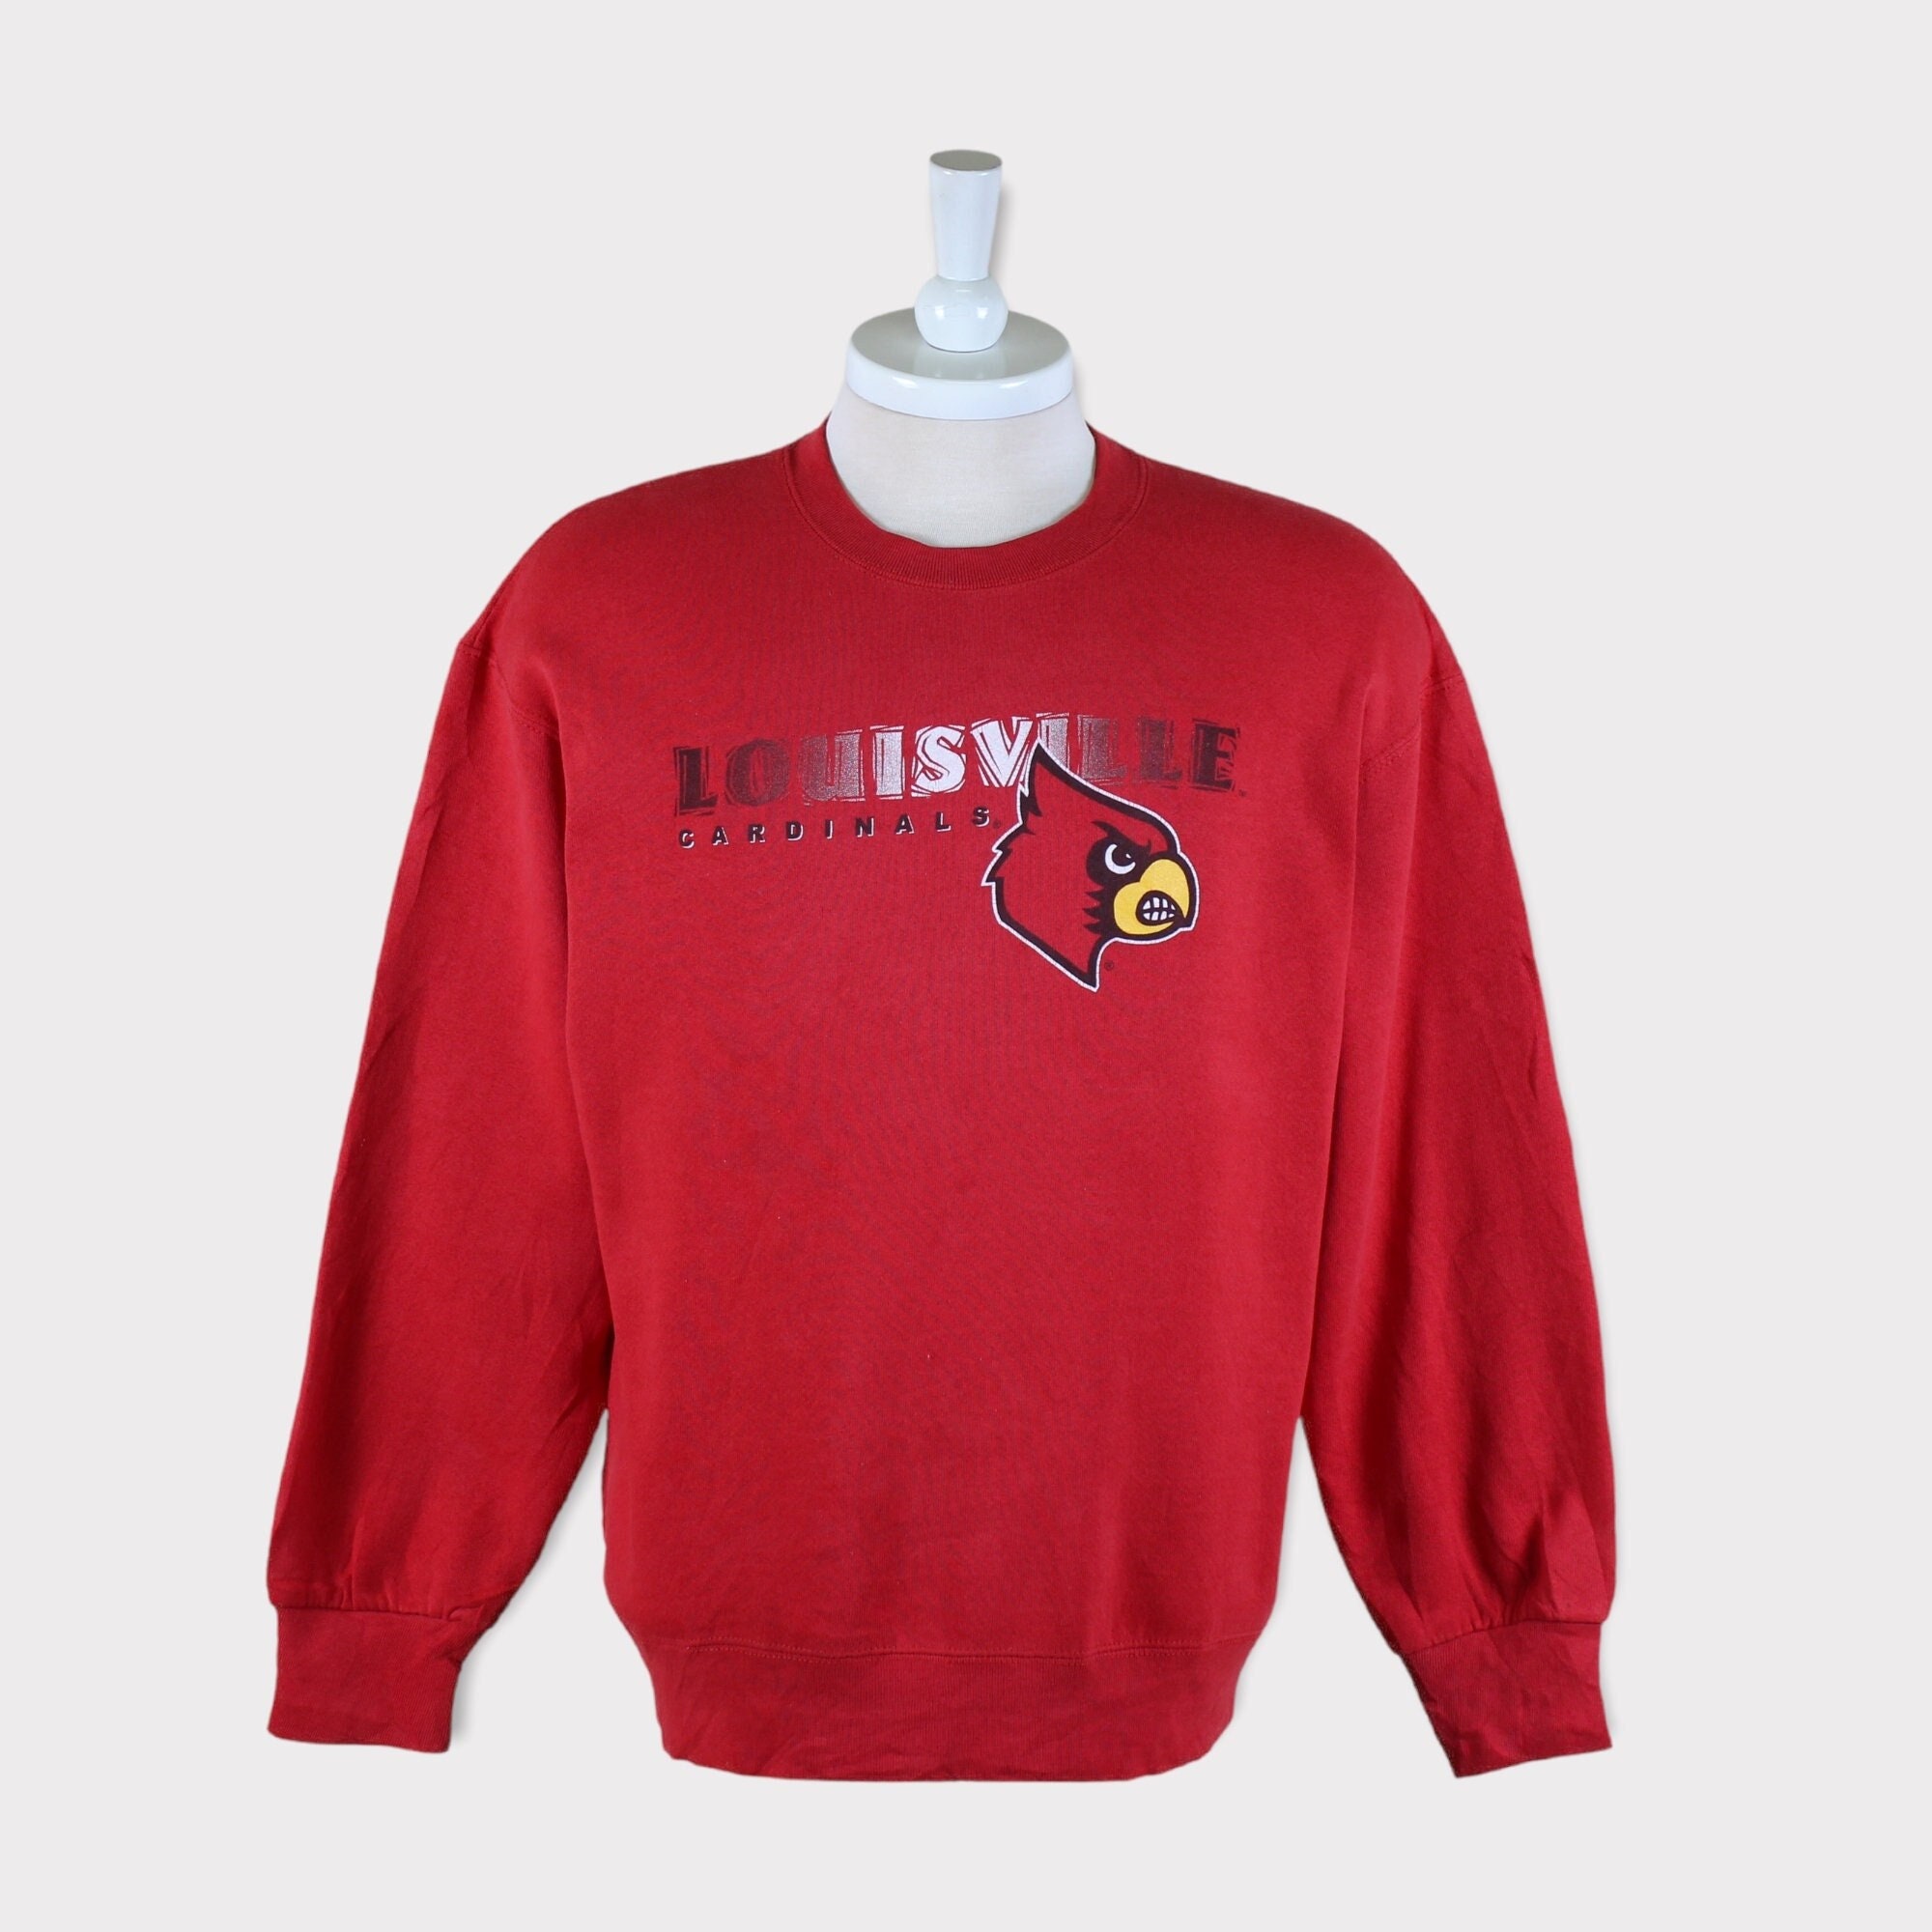 Vintage Louisville Cardinals split bar hoodie sweatshirt size large  distressed